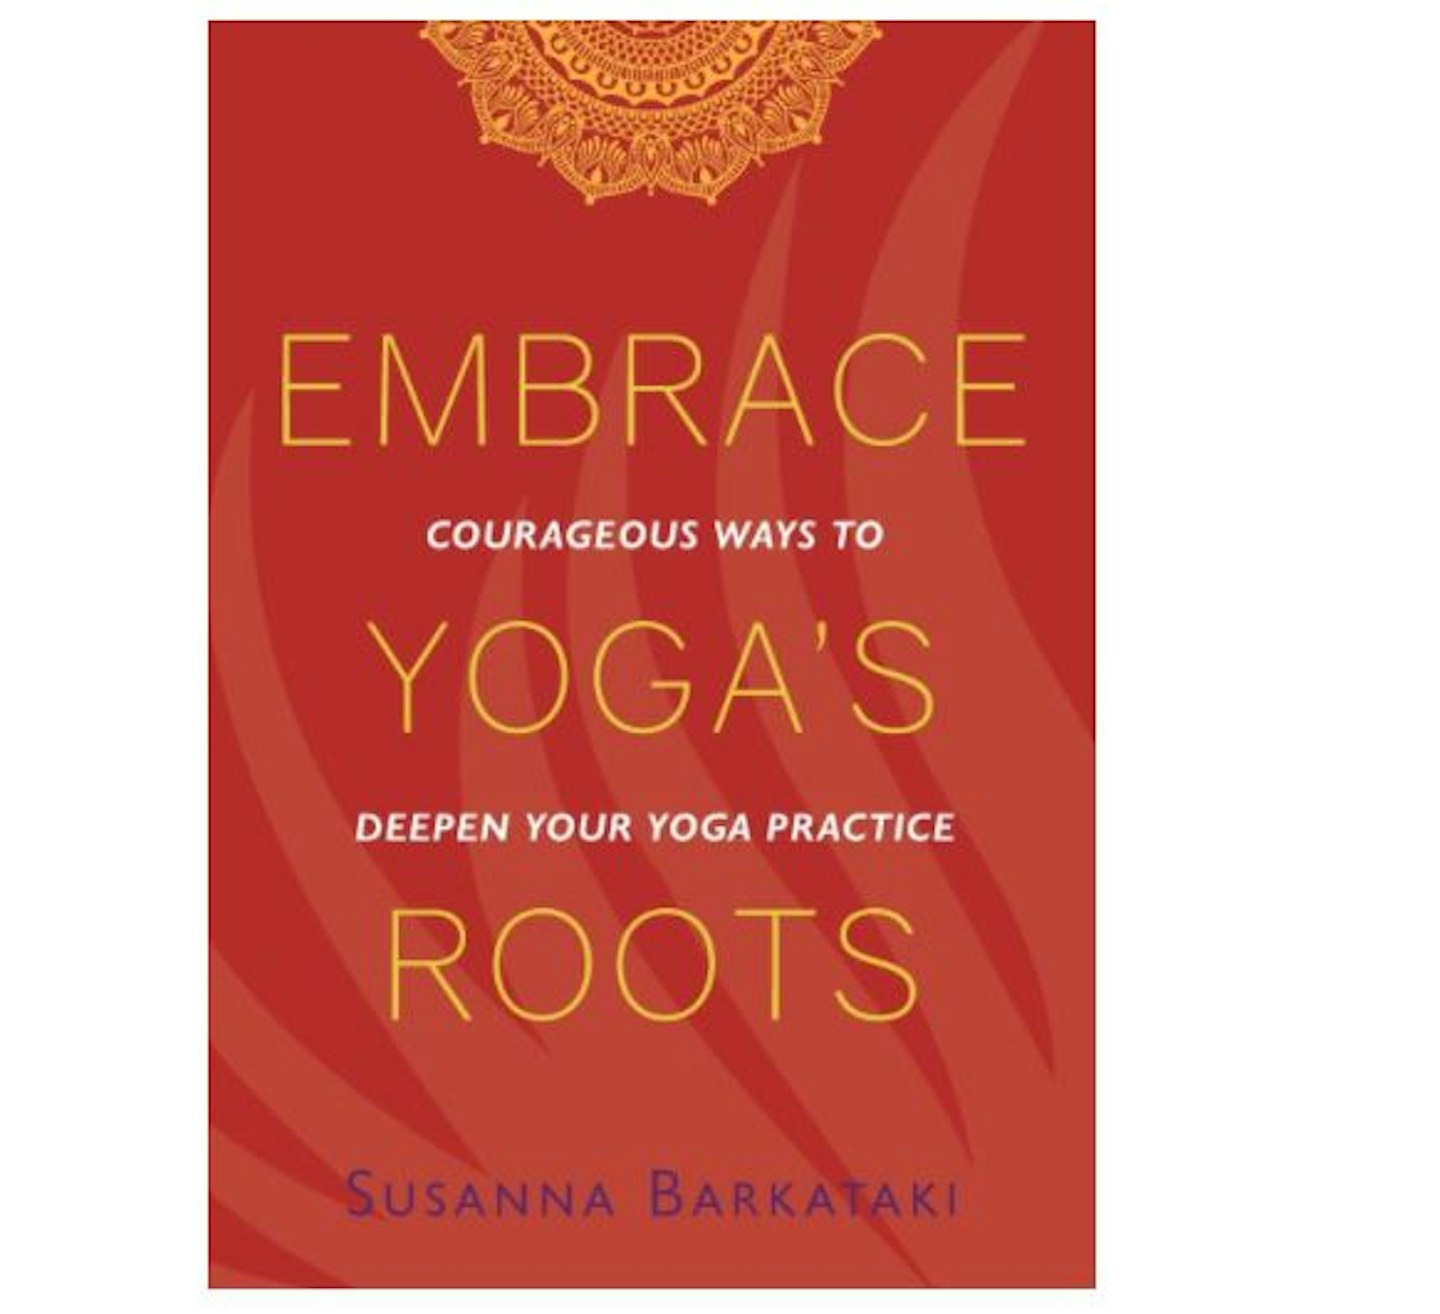 Embrace Yogau2019s Roots: Courageous Ways to Deepen Your Yoga Practice u2013 Susanna Barkataki